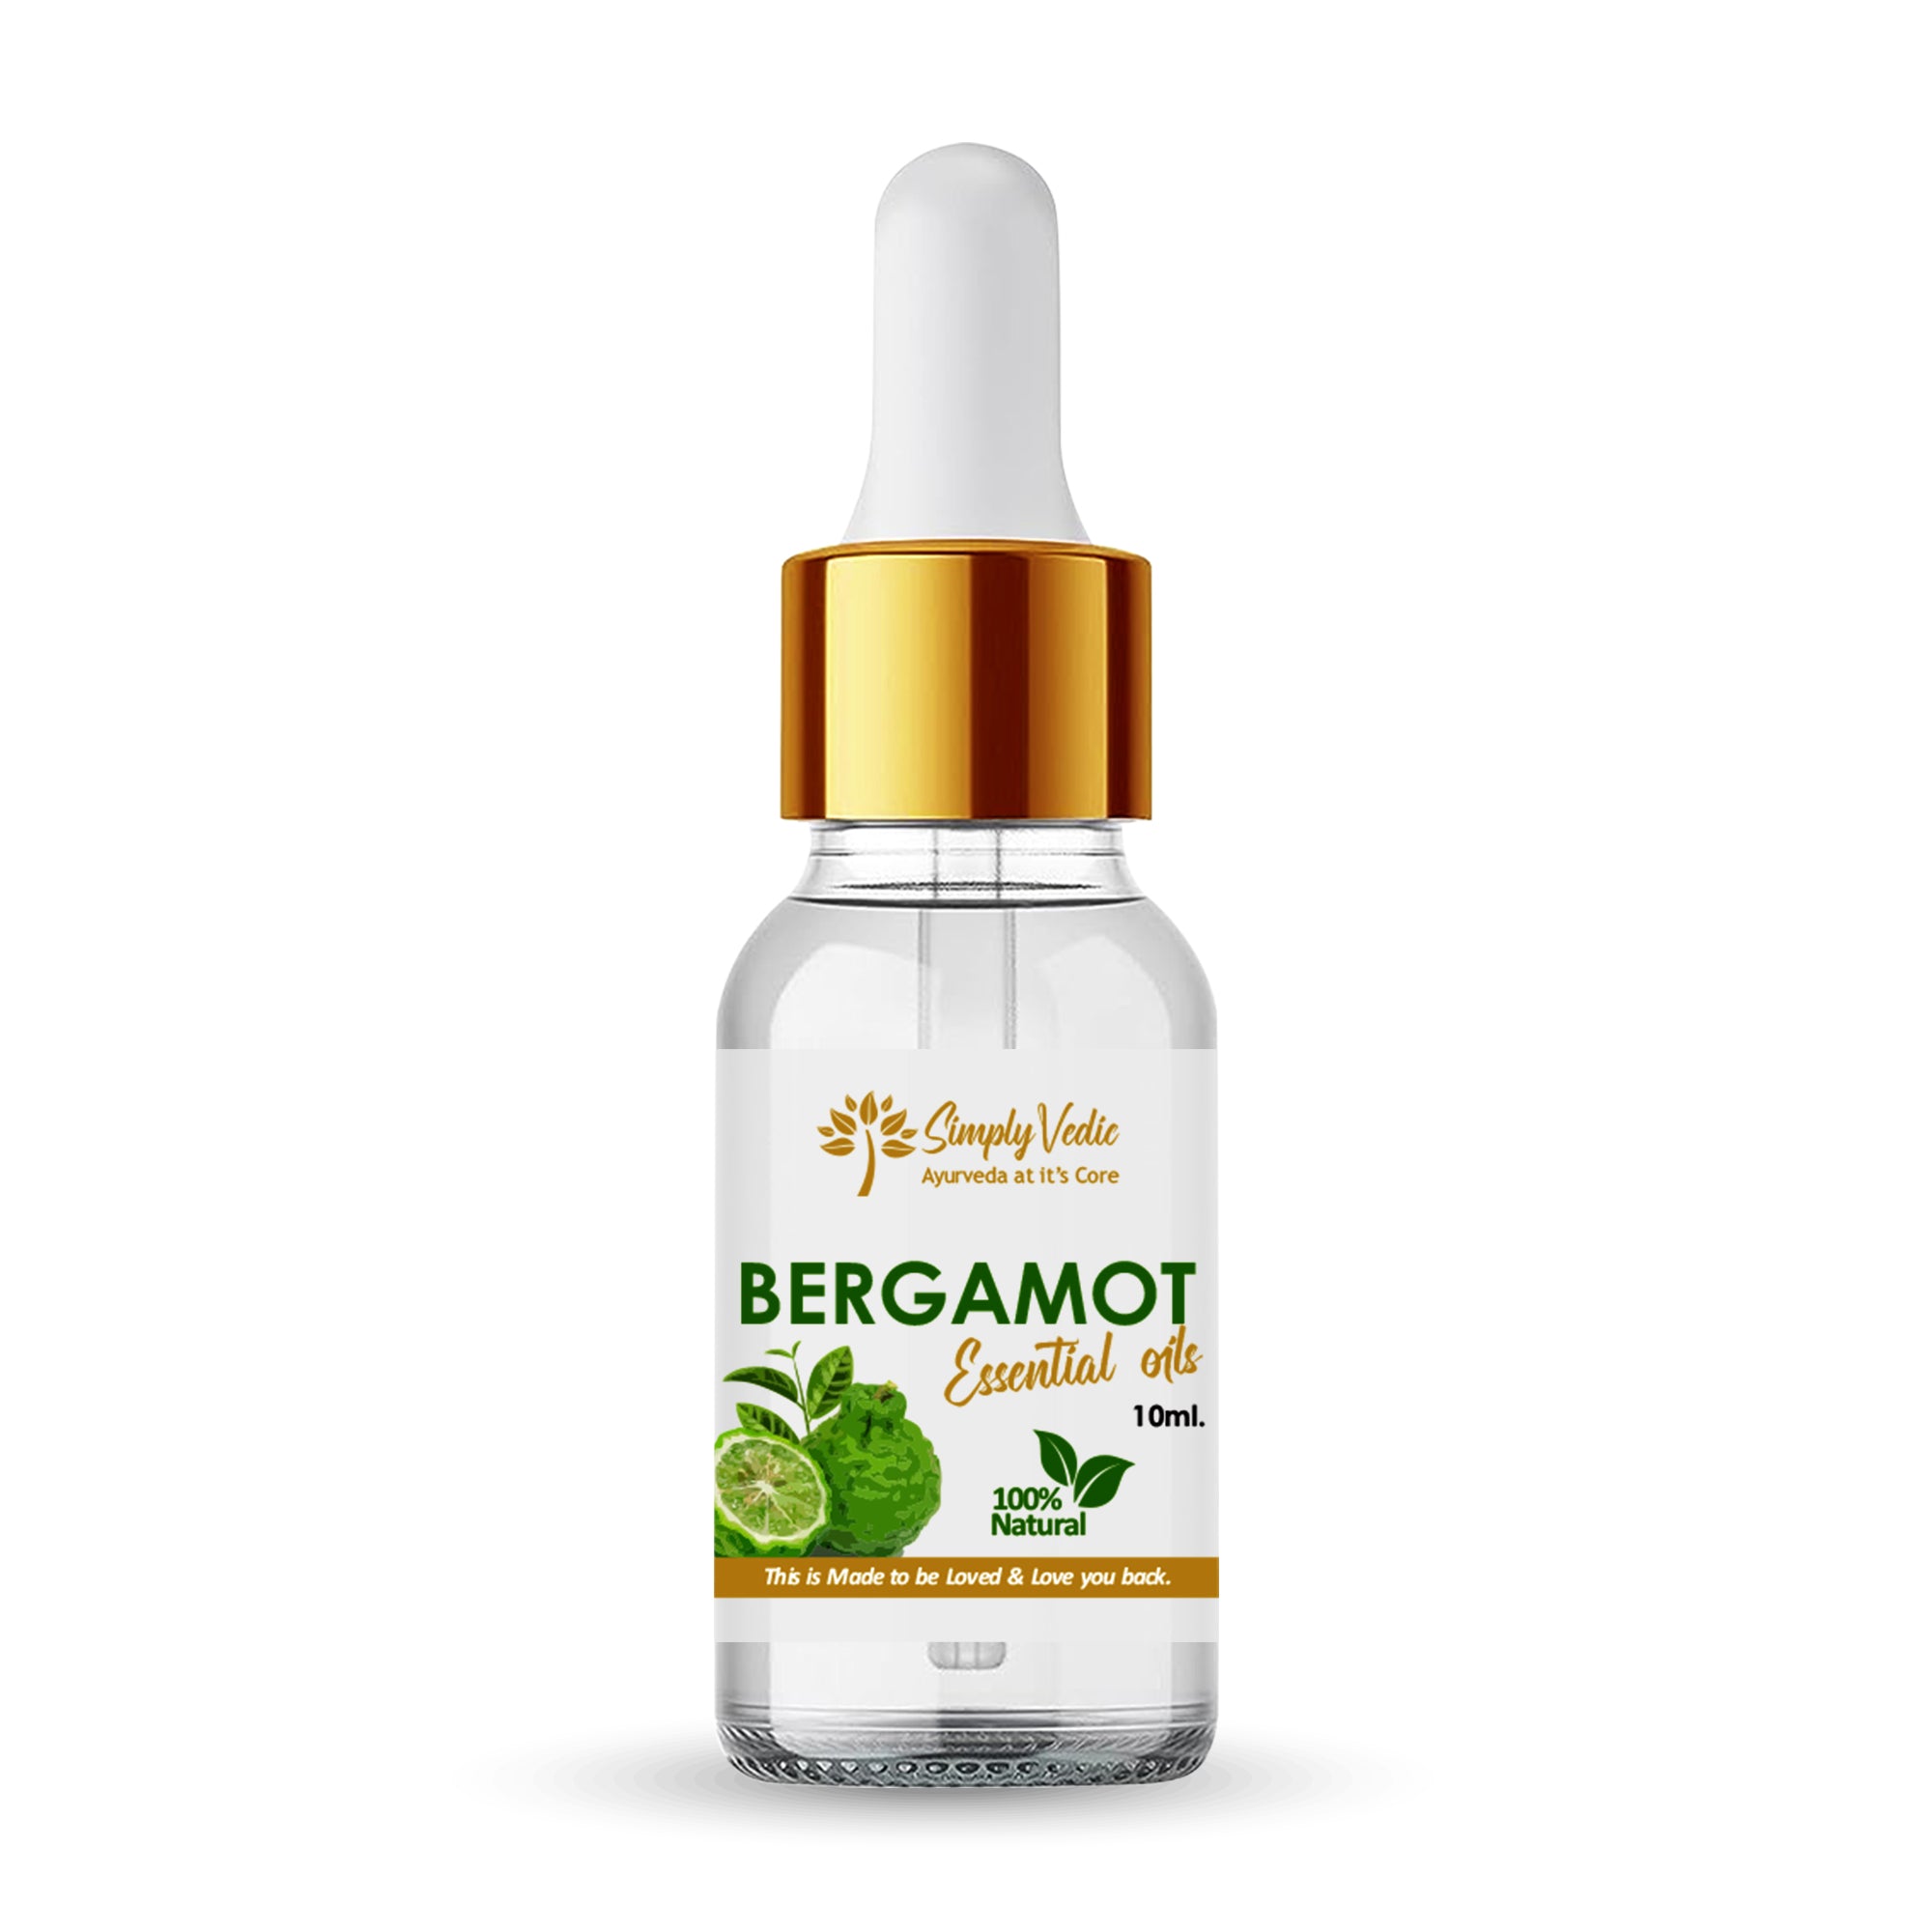 Simply Vedic Bergamot Essential Oil